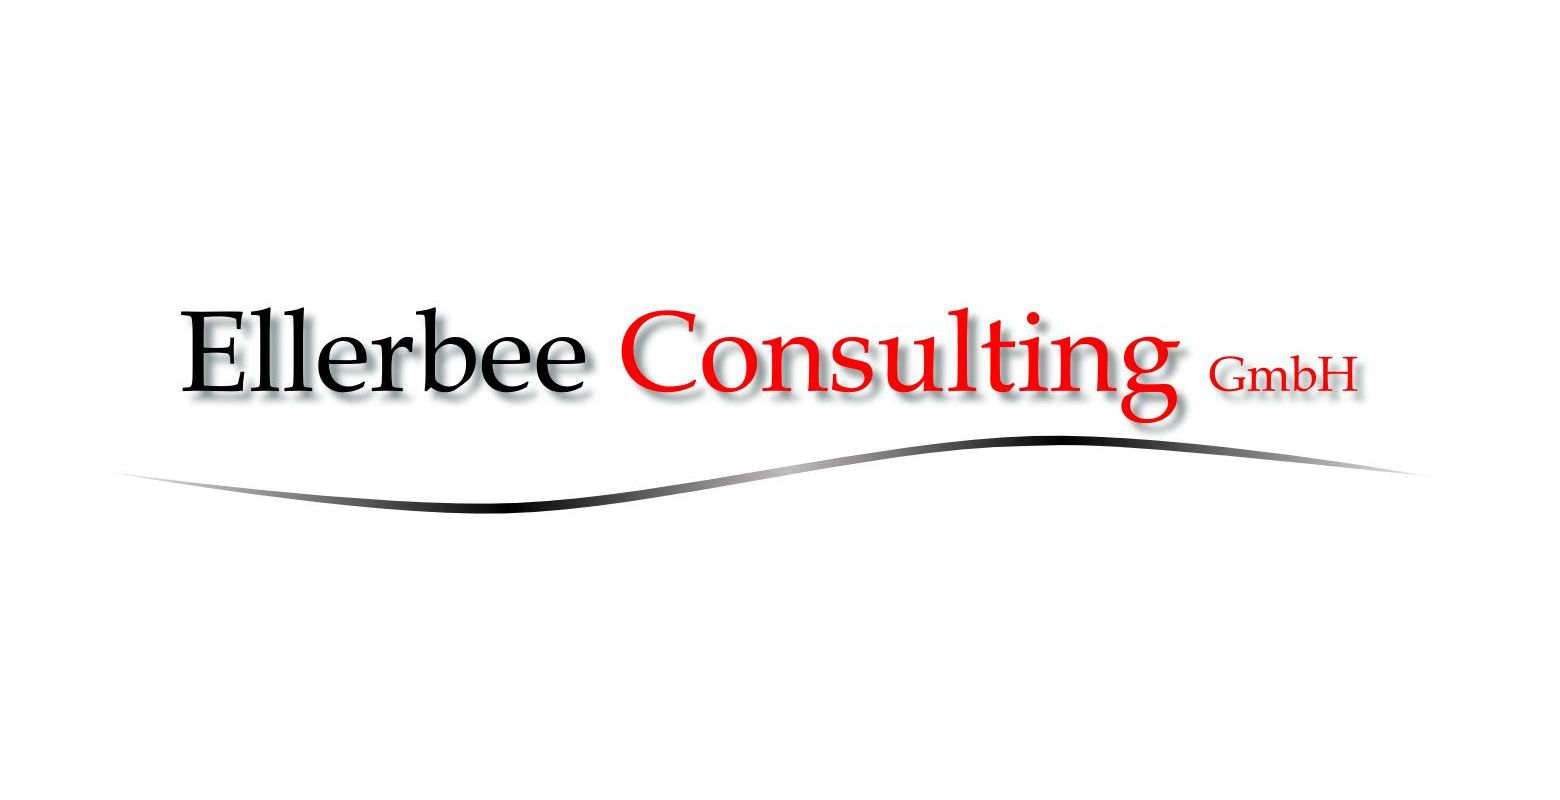 Ellerbee Consulting GmbH